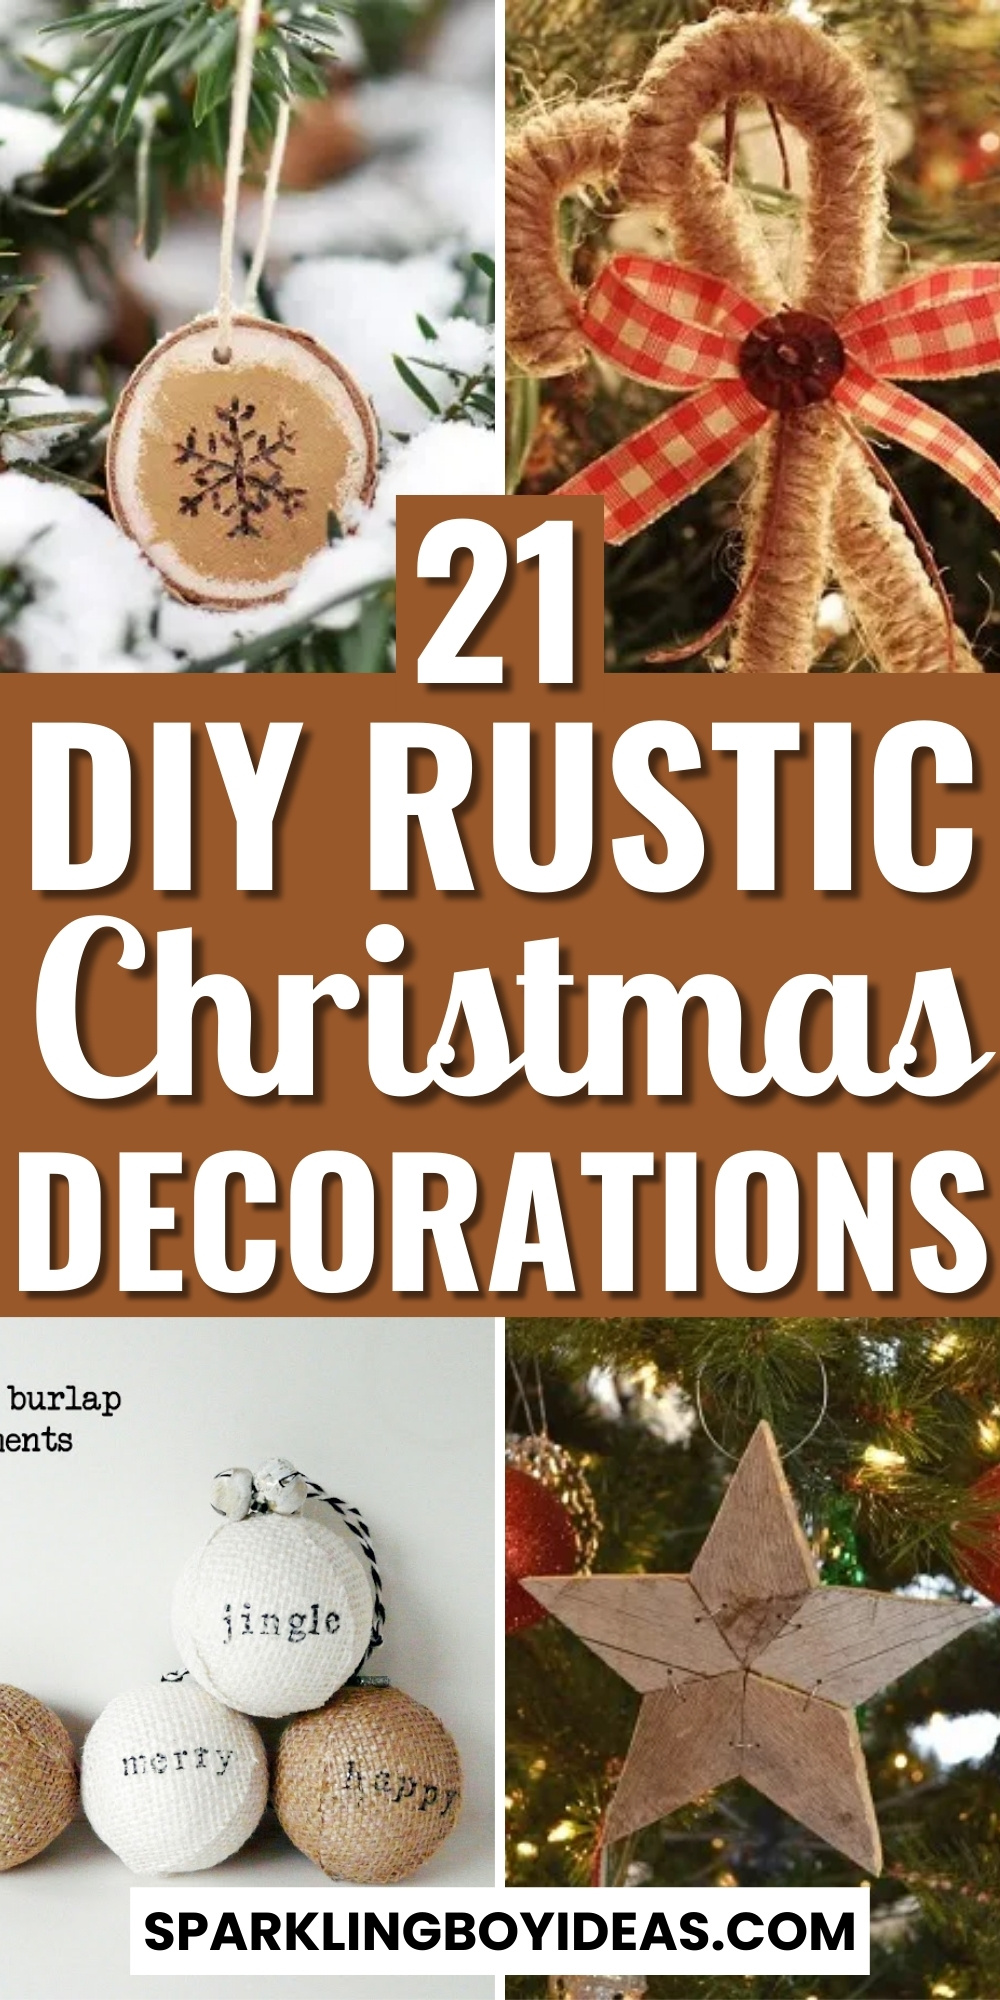 21 DIY Rustic Christmas Decorations - Sparkling Boy Ideas